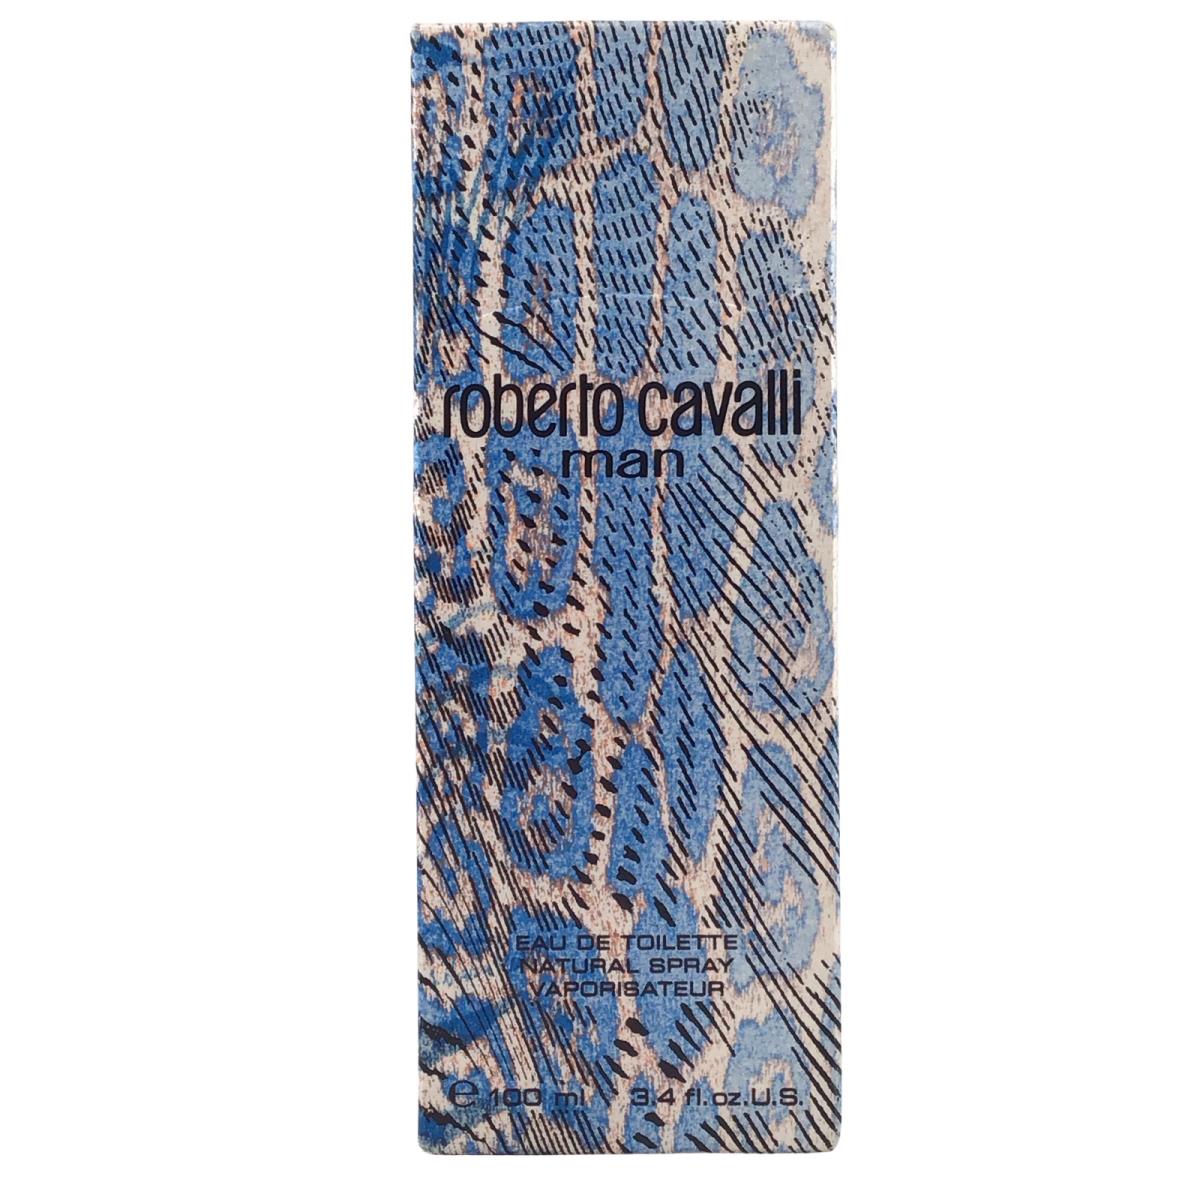 Roberto Cavalli Man Edt Eau de Toilette Natural Spray Cologne 3.4 oz/100 ml